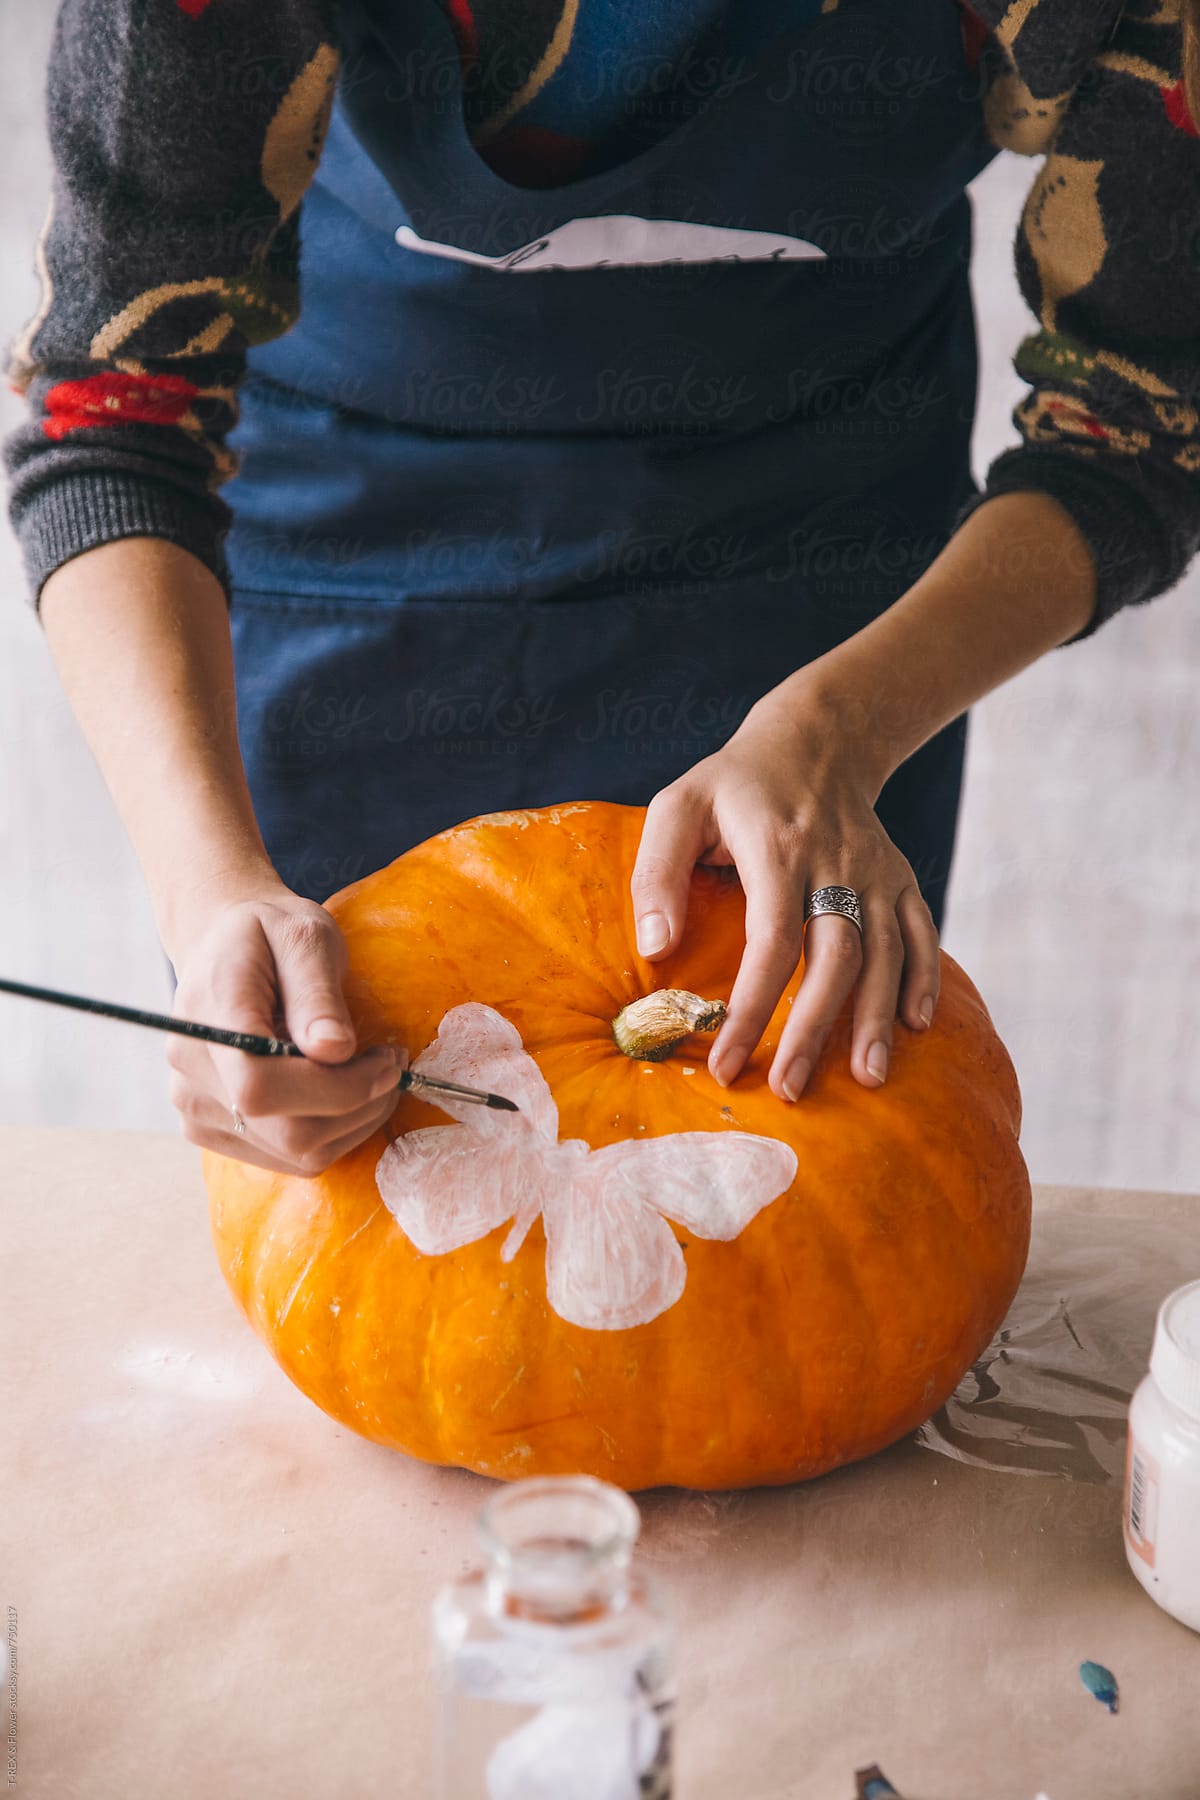 Woman painting on pumpkin using decoupage technique